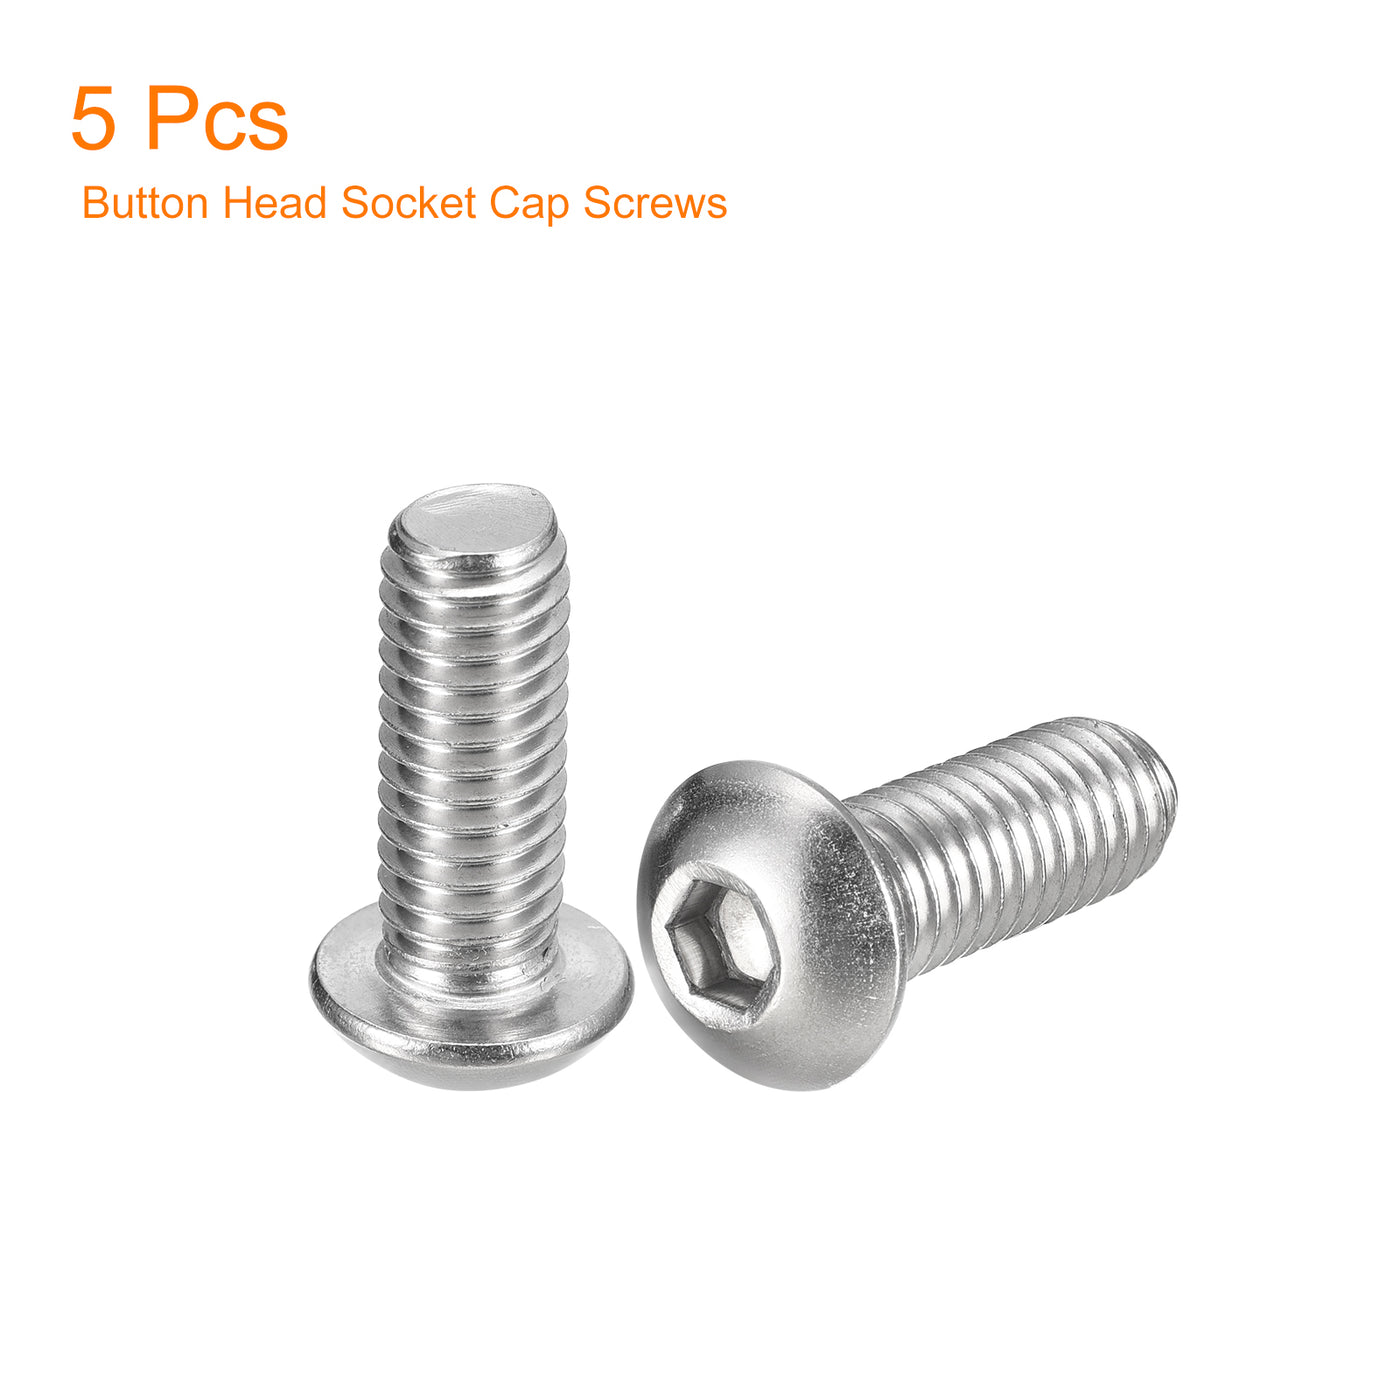 uxcell Uxcell 3/8-16x1" Button Head Socket Cap Screws, 5pcs 304 Stainless Steel Screws